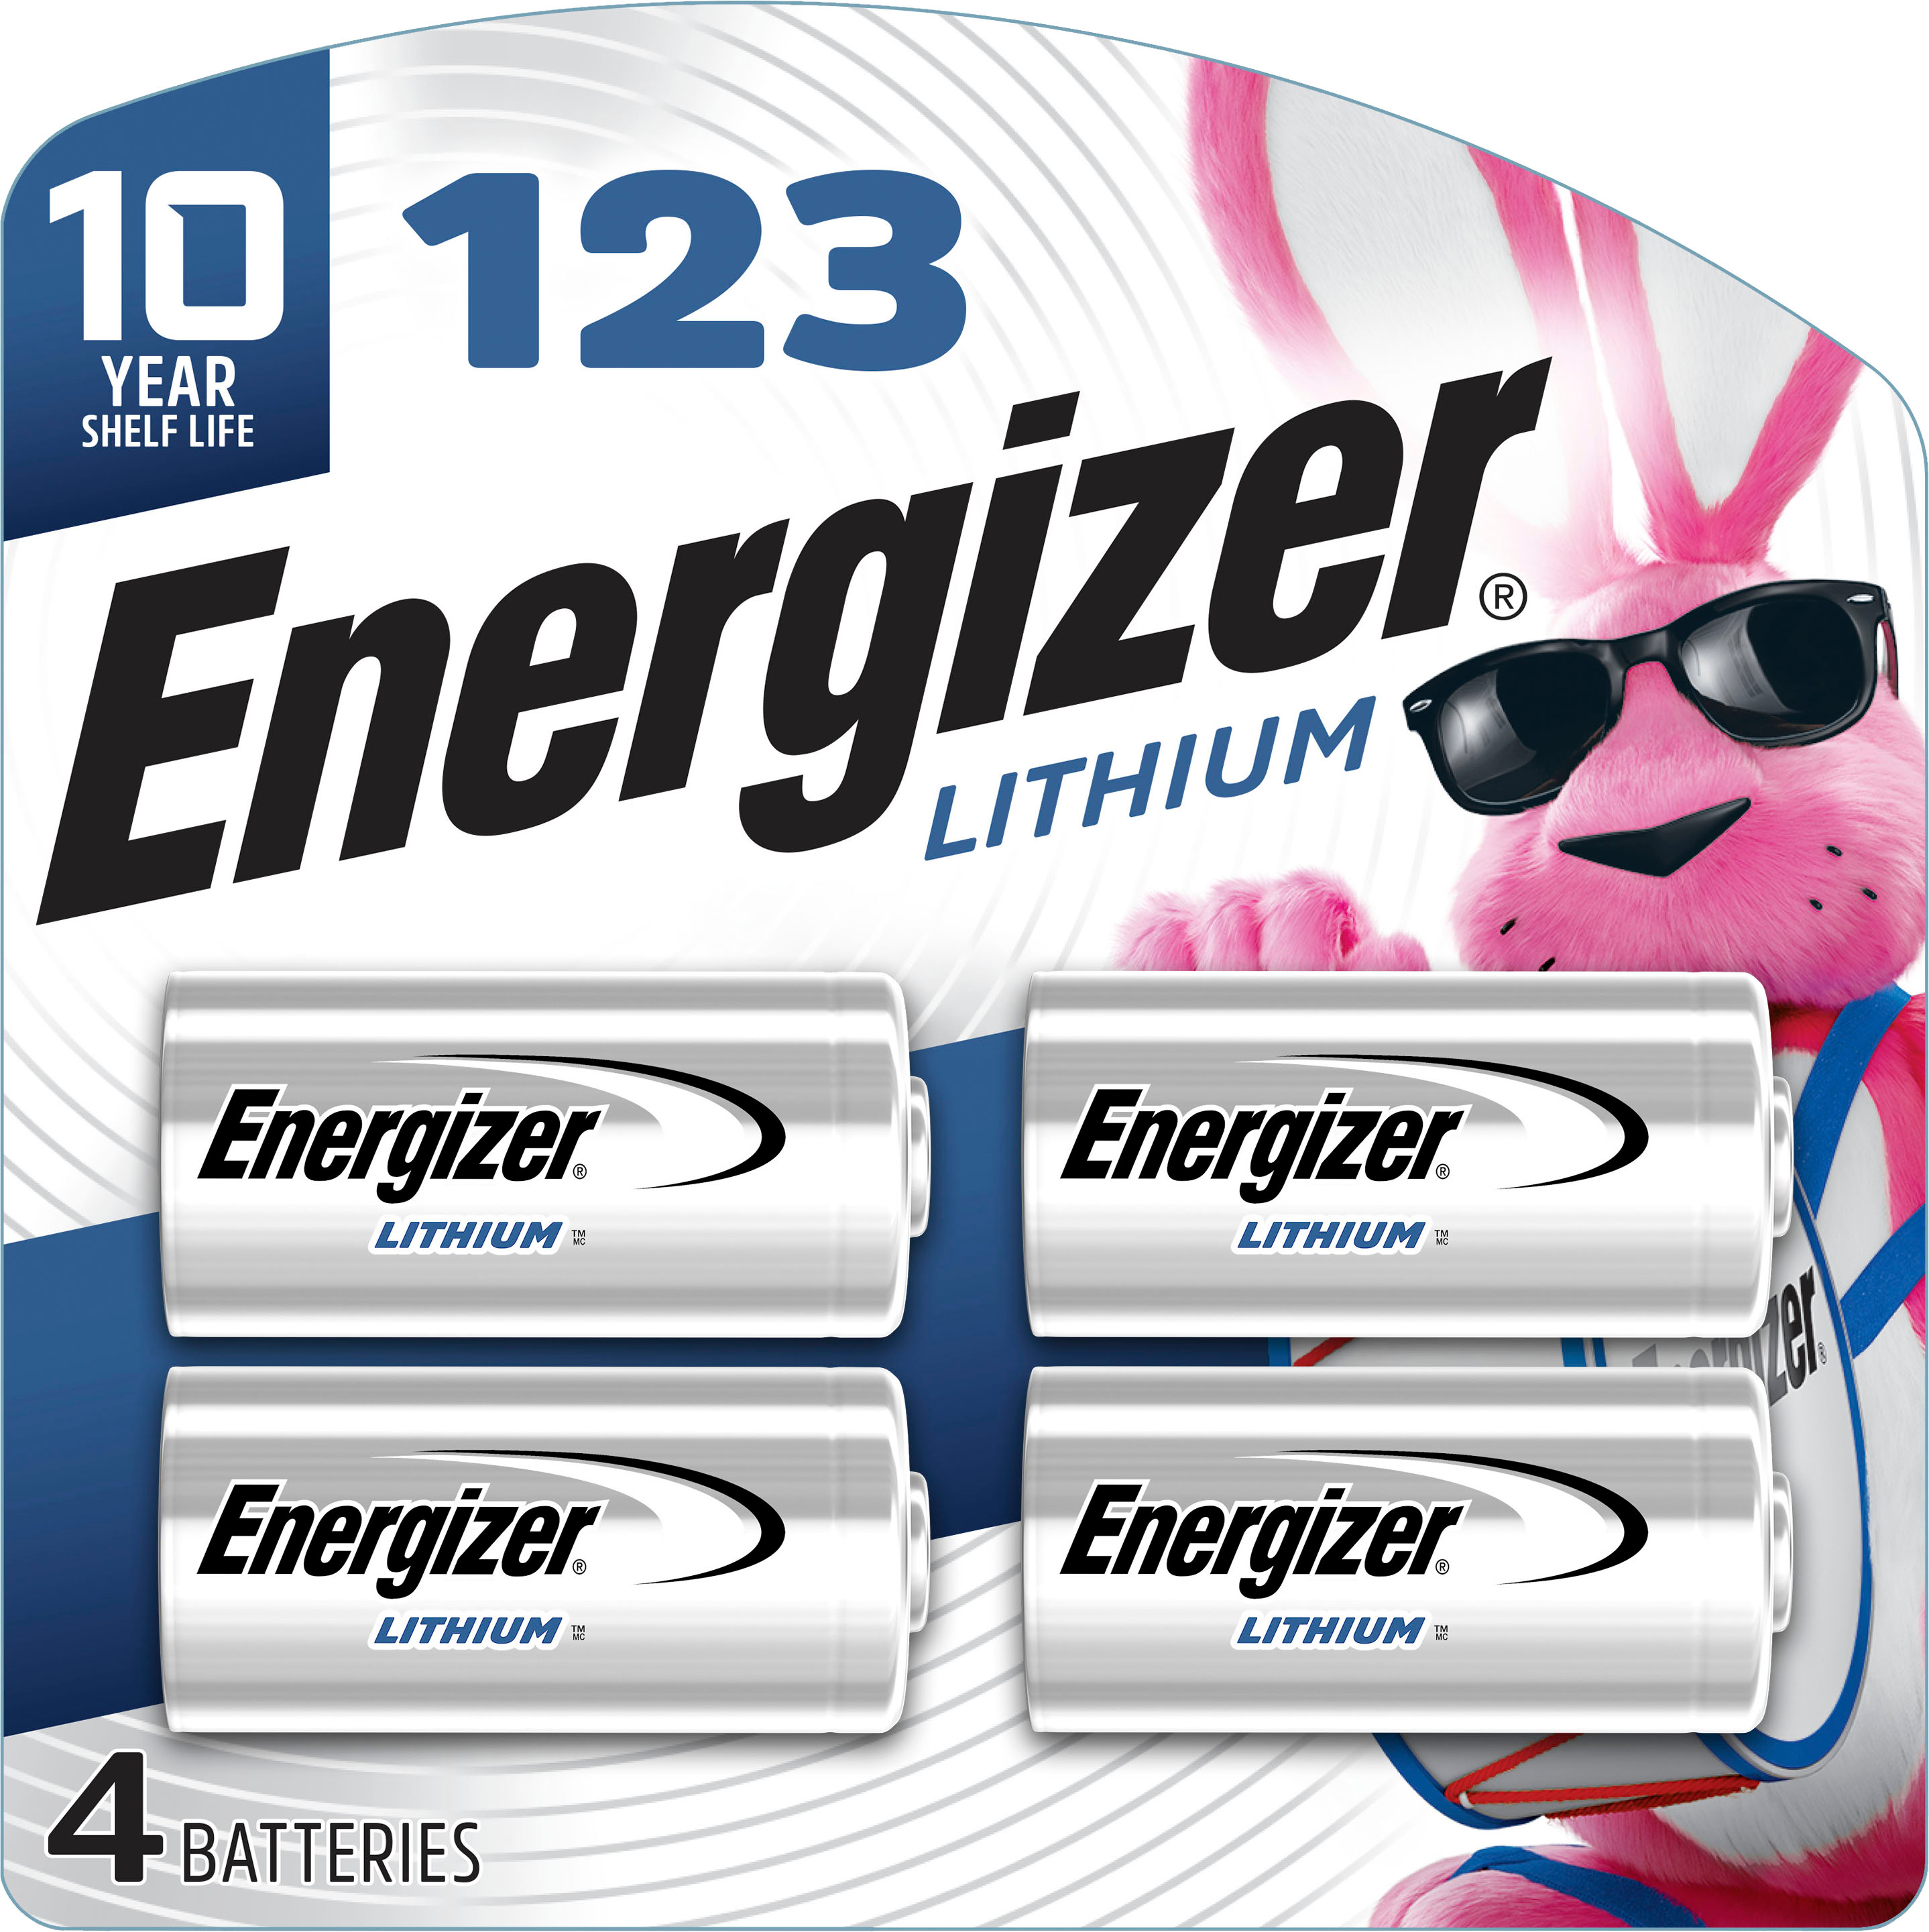 energizer batteries logo